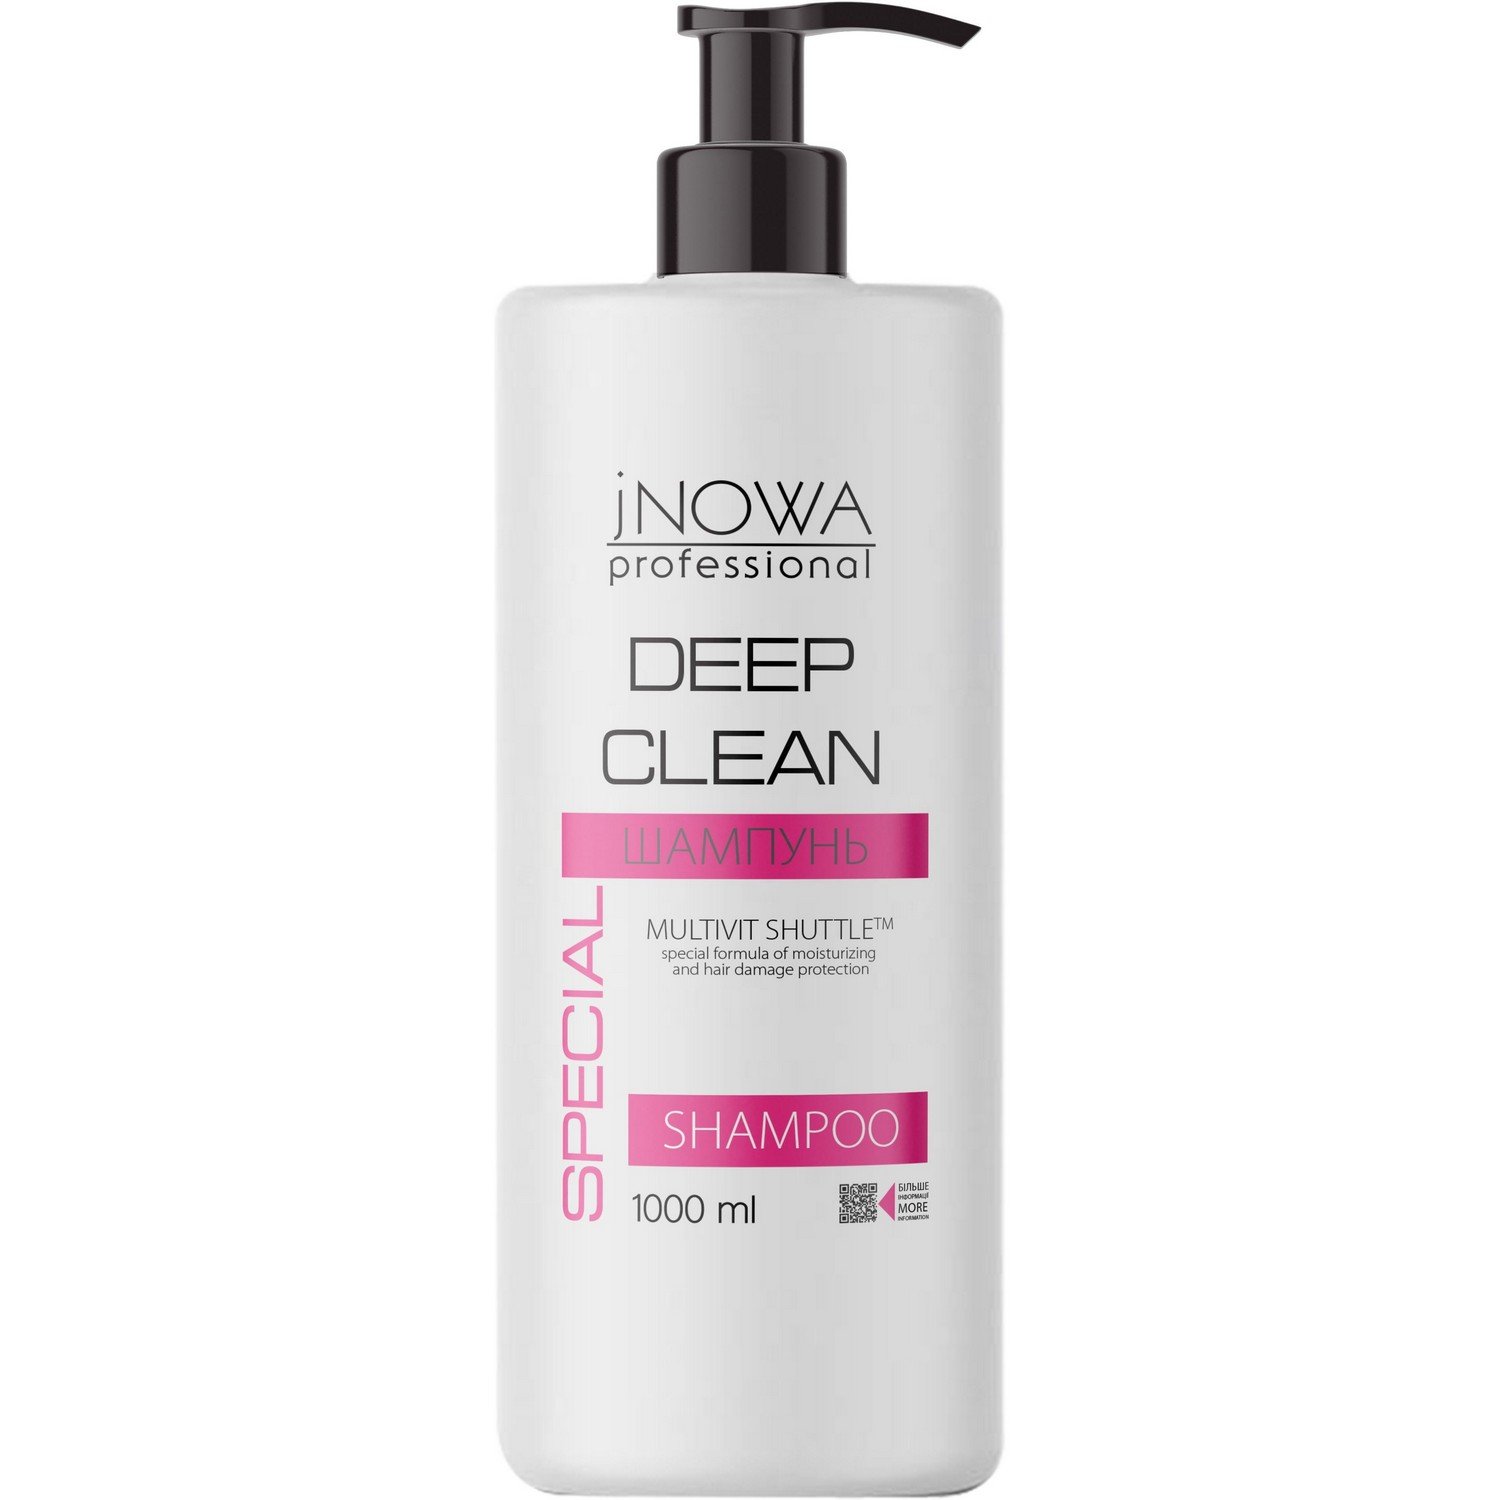 Шампунь jNOWA Professional Special Deep Clean, 1000 мл - фото 1